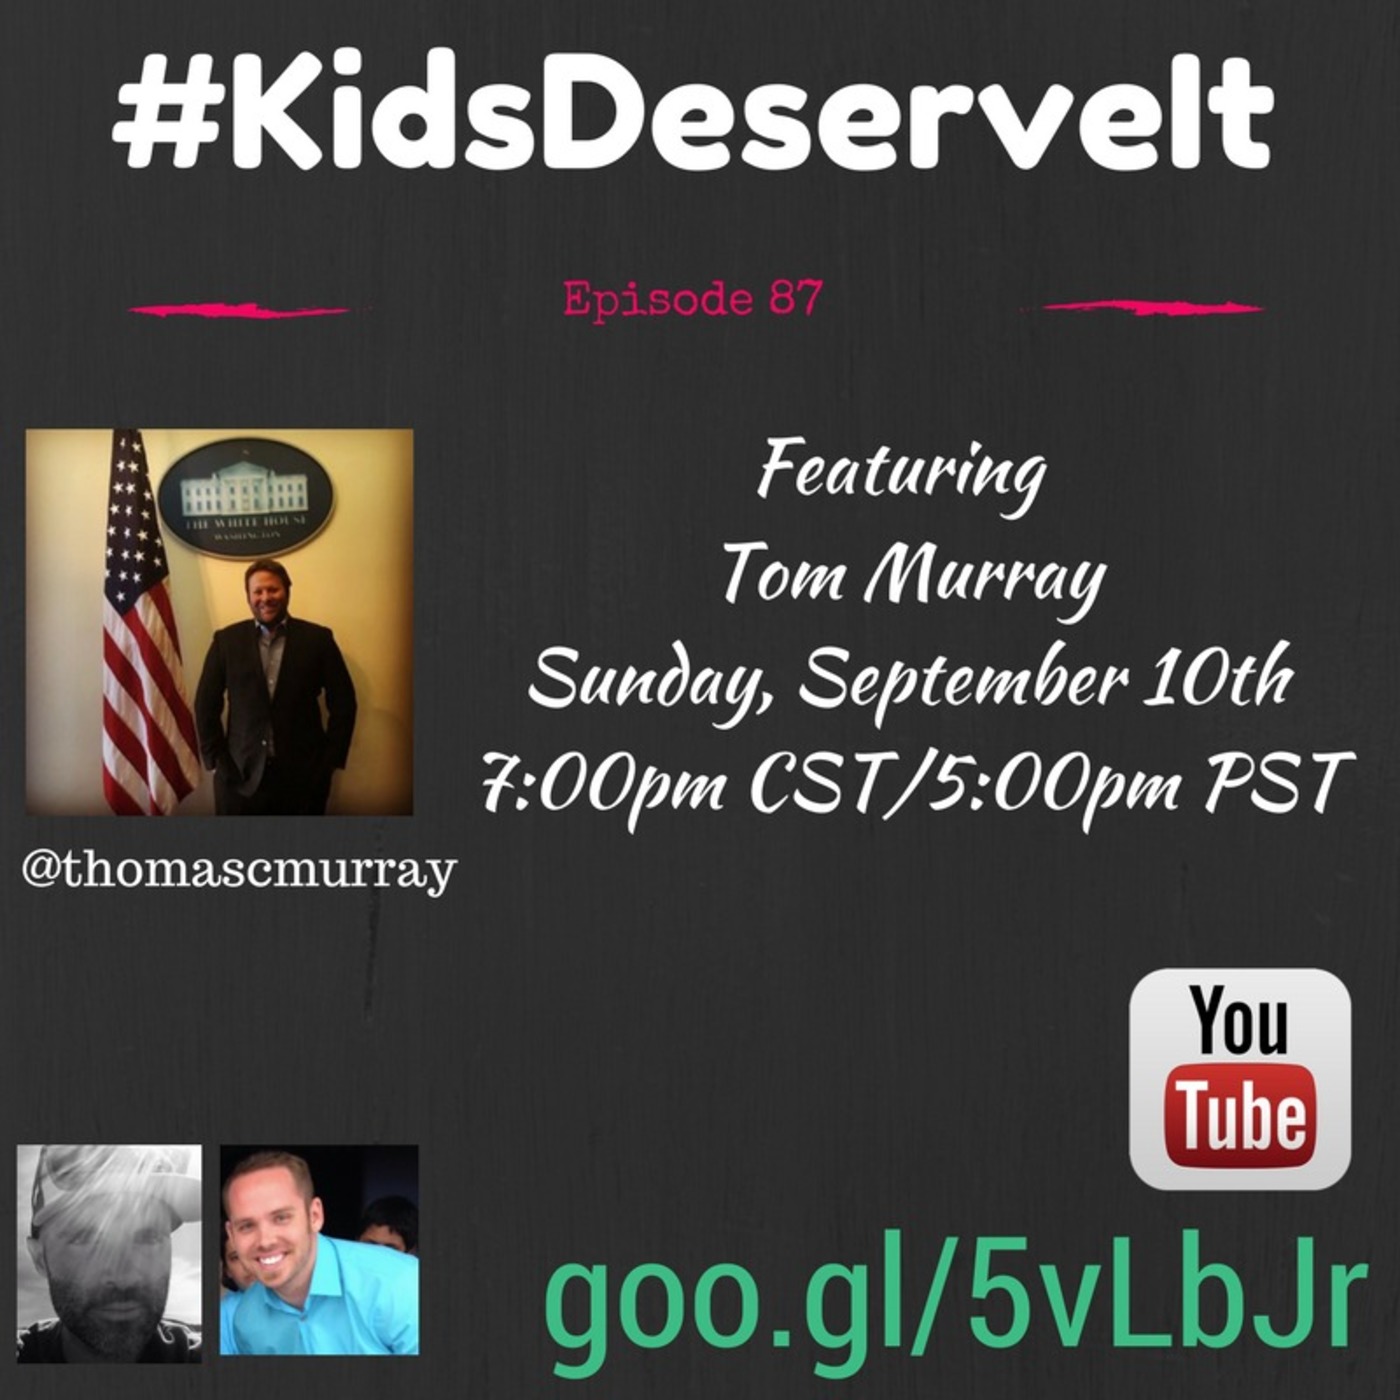 Episode 87 of #KidsDeserveIt with Tom Murray